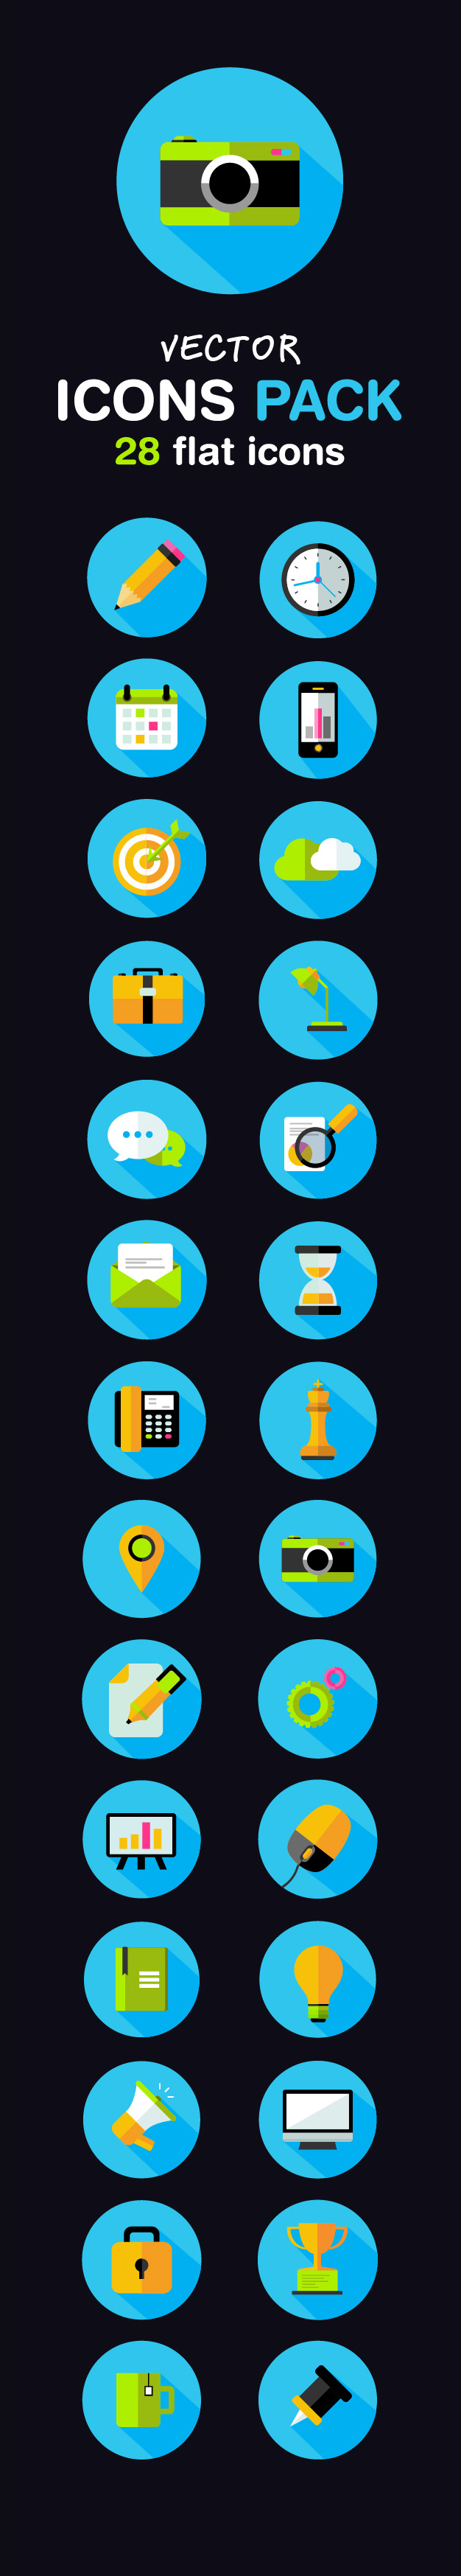 Icon flat object flat icons icons pack free icons free media Media Icons set icons set flat icons set